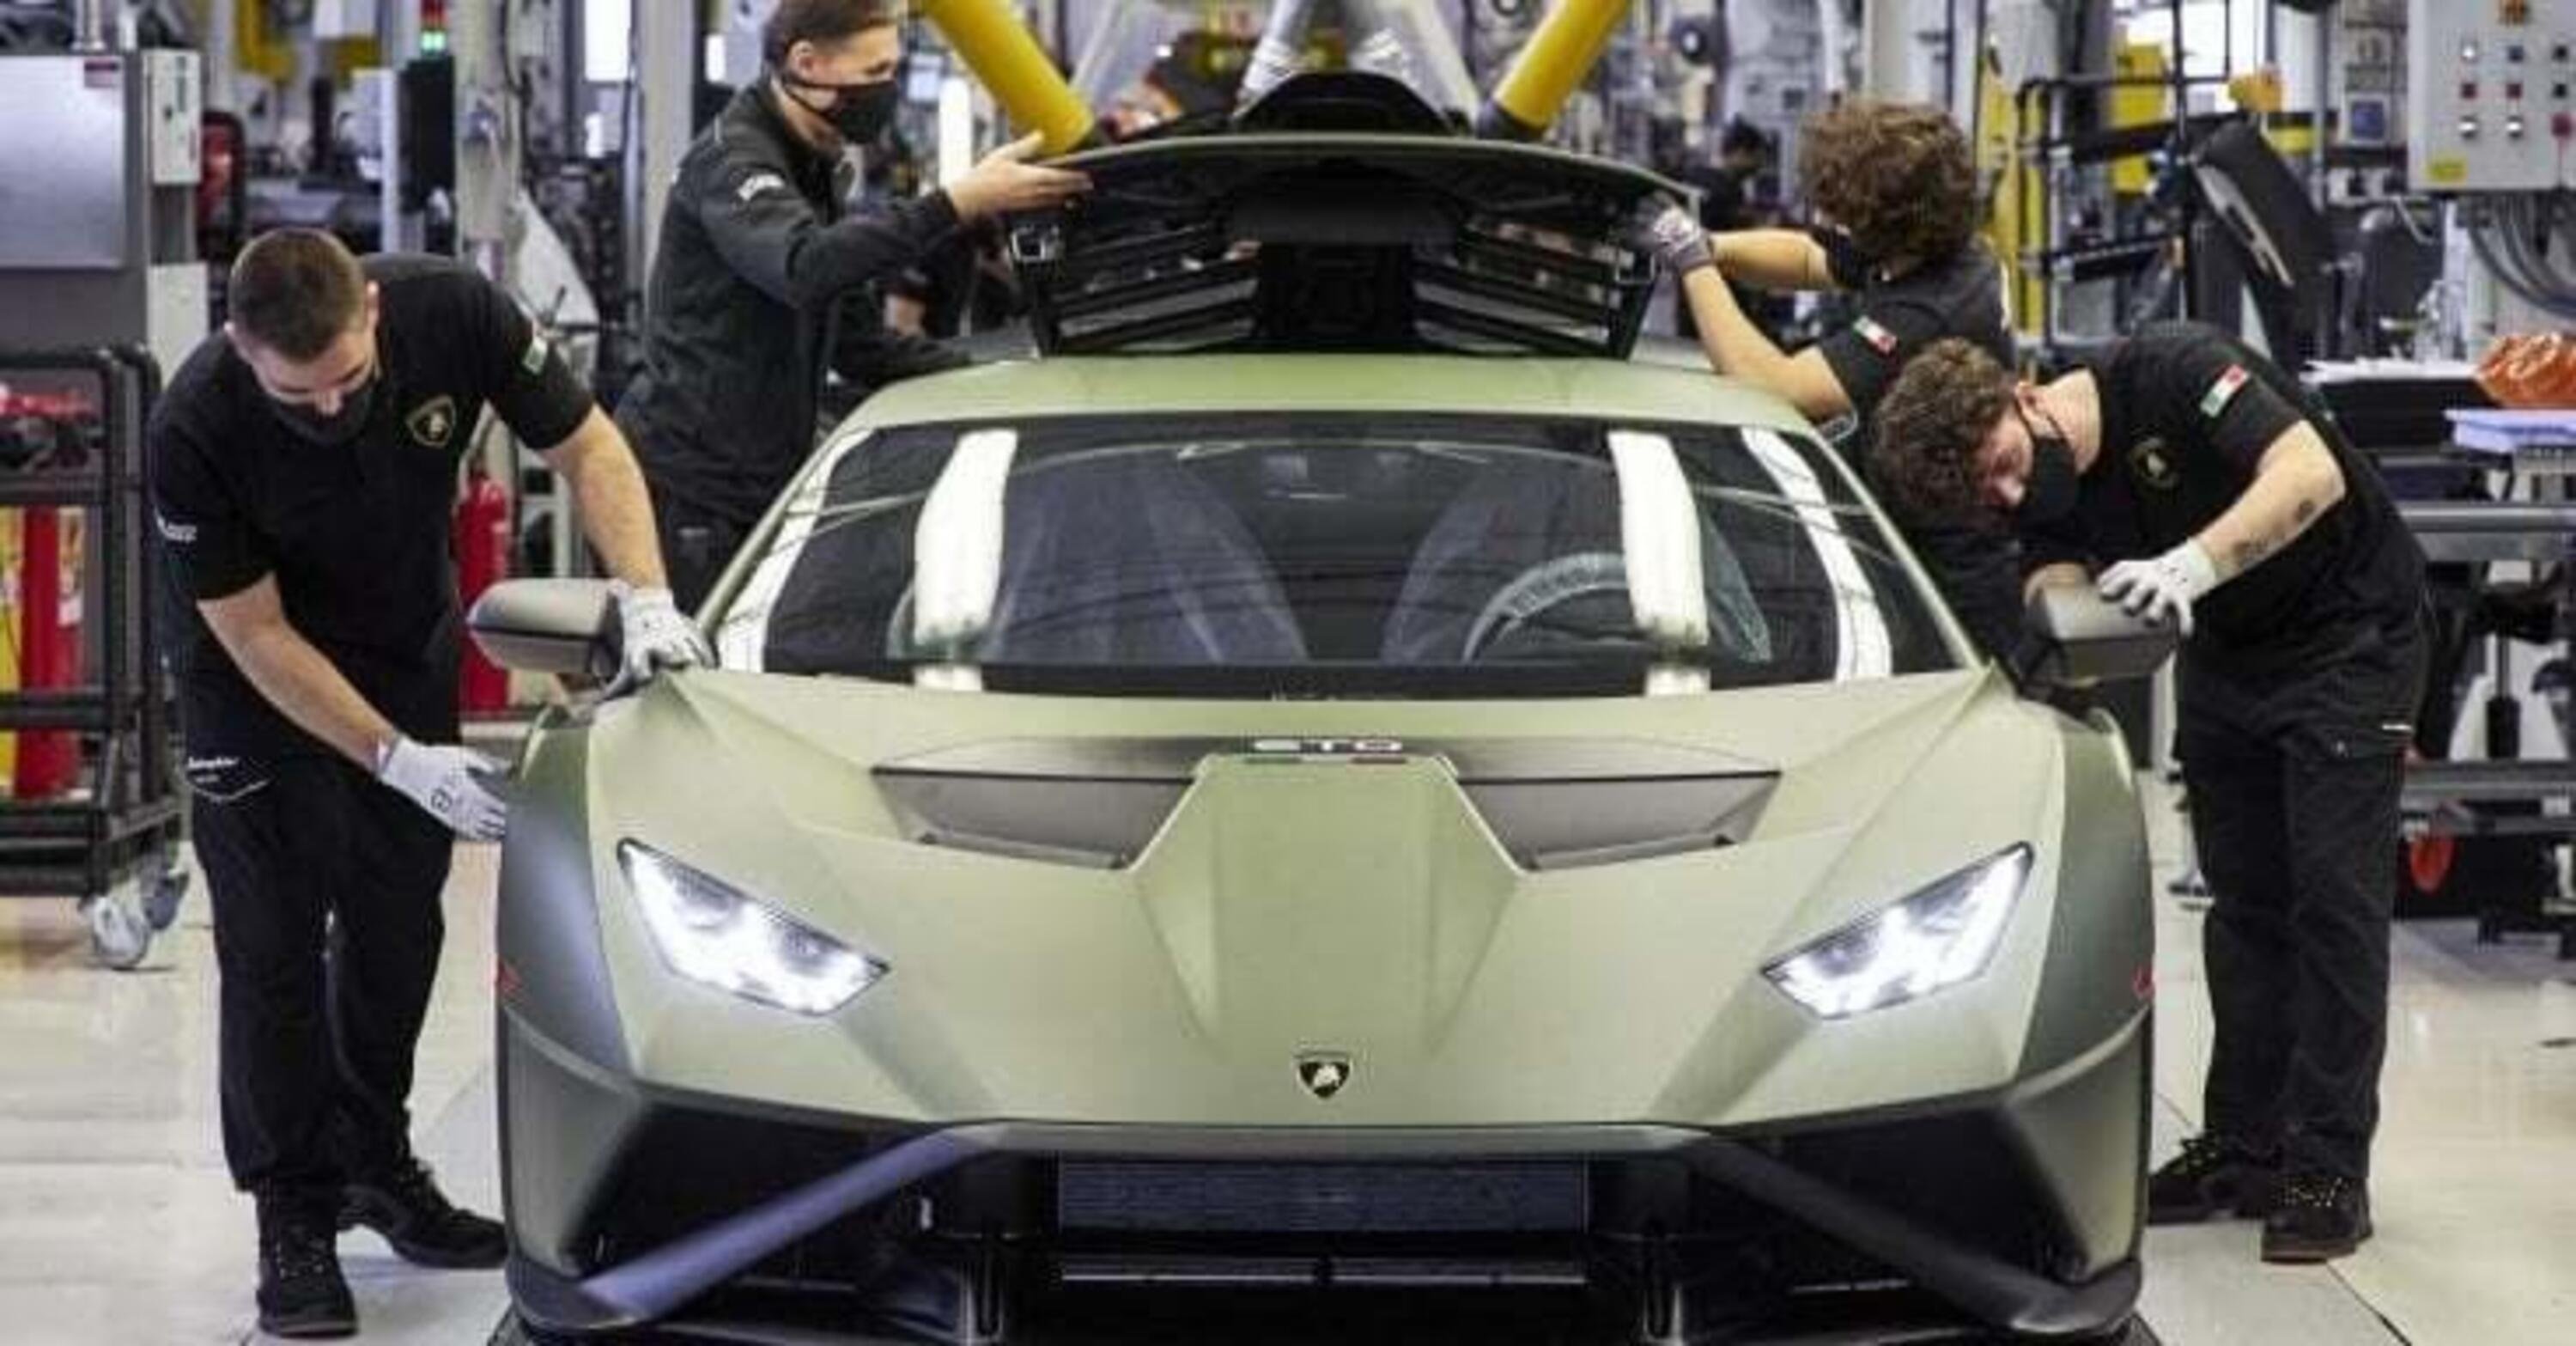 Guerra in Ucraina, Lamborghini sospende i propri business in Russia